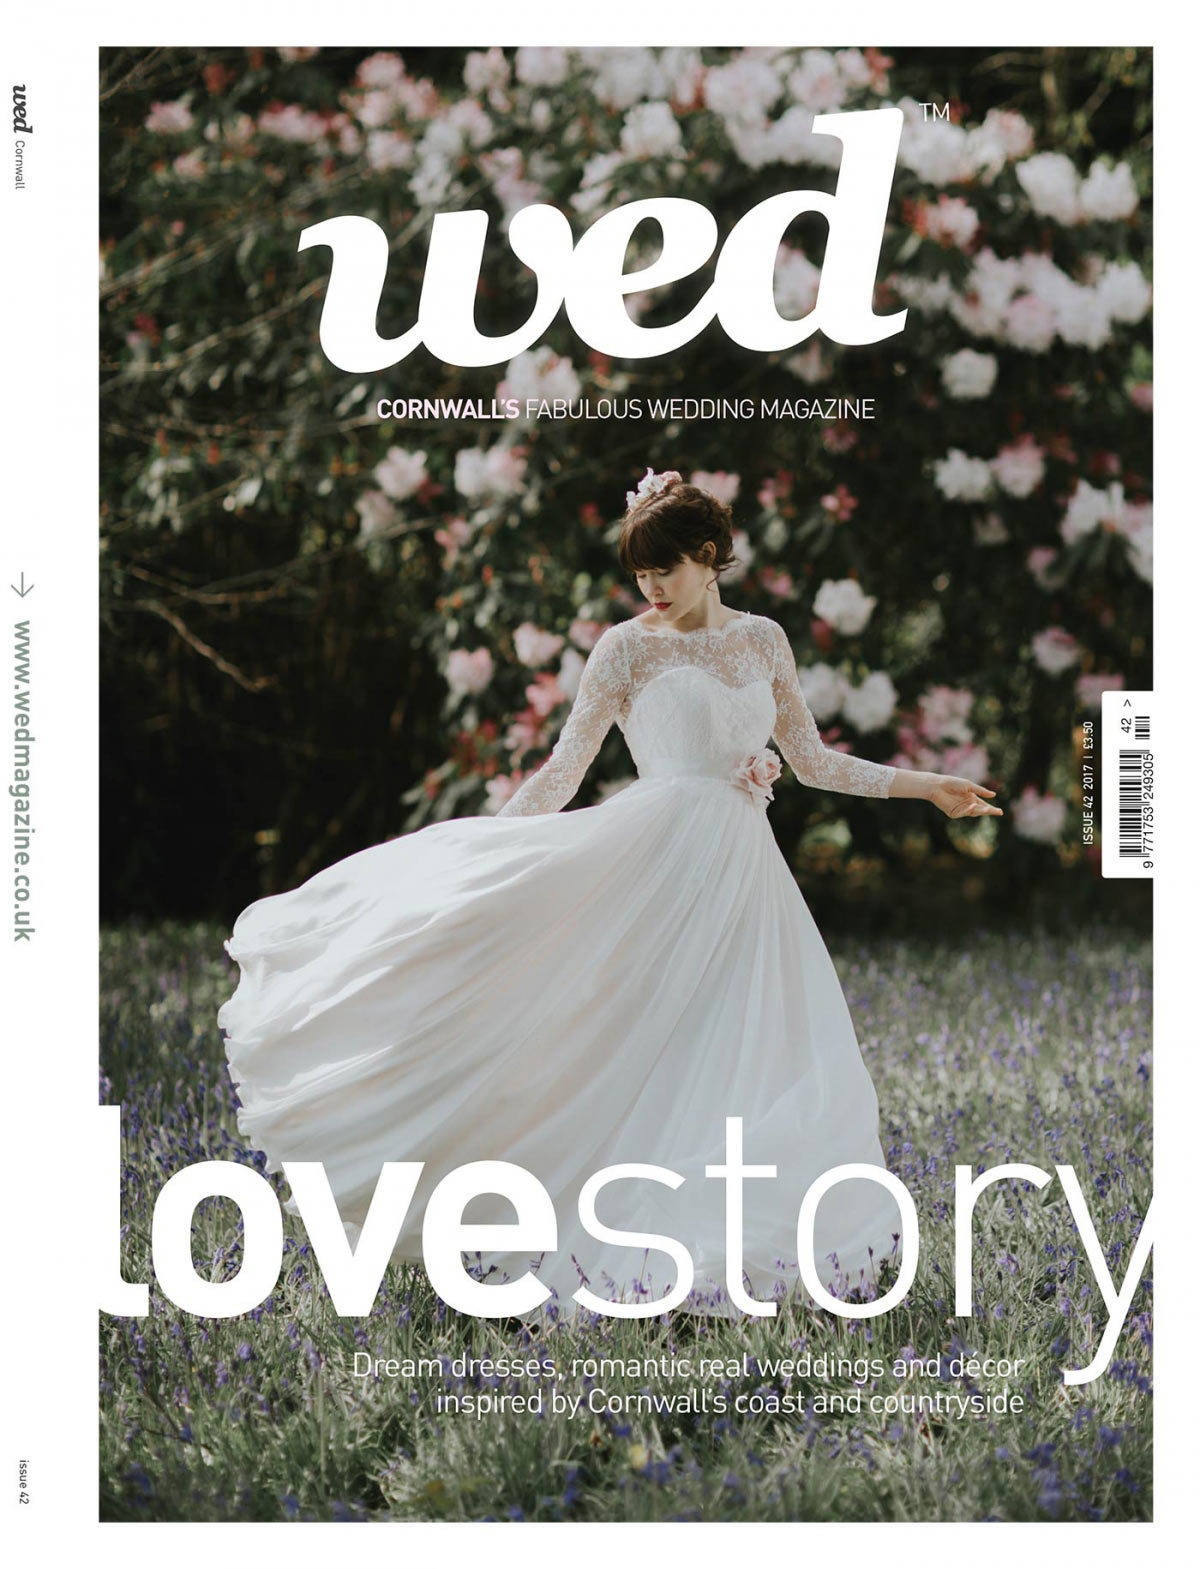 Cornwall Wed Magazine - Issue 42